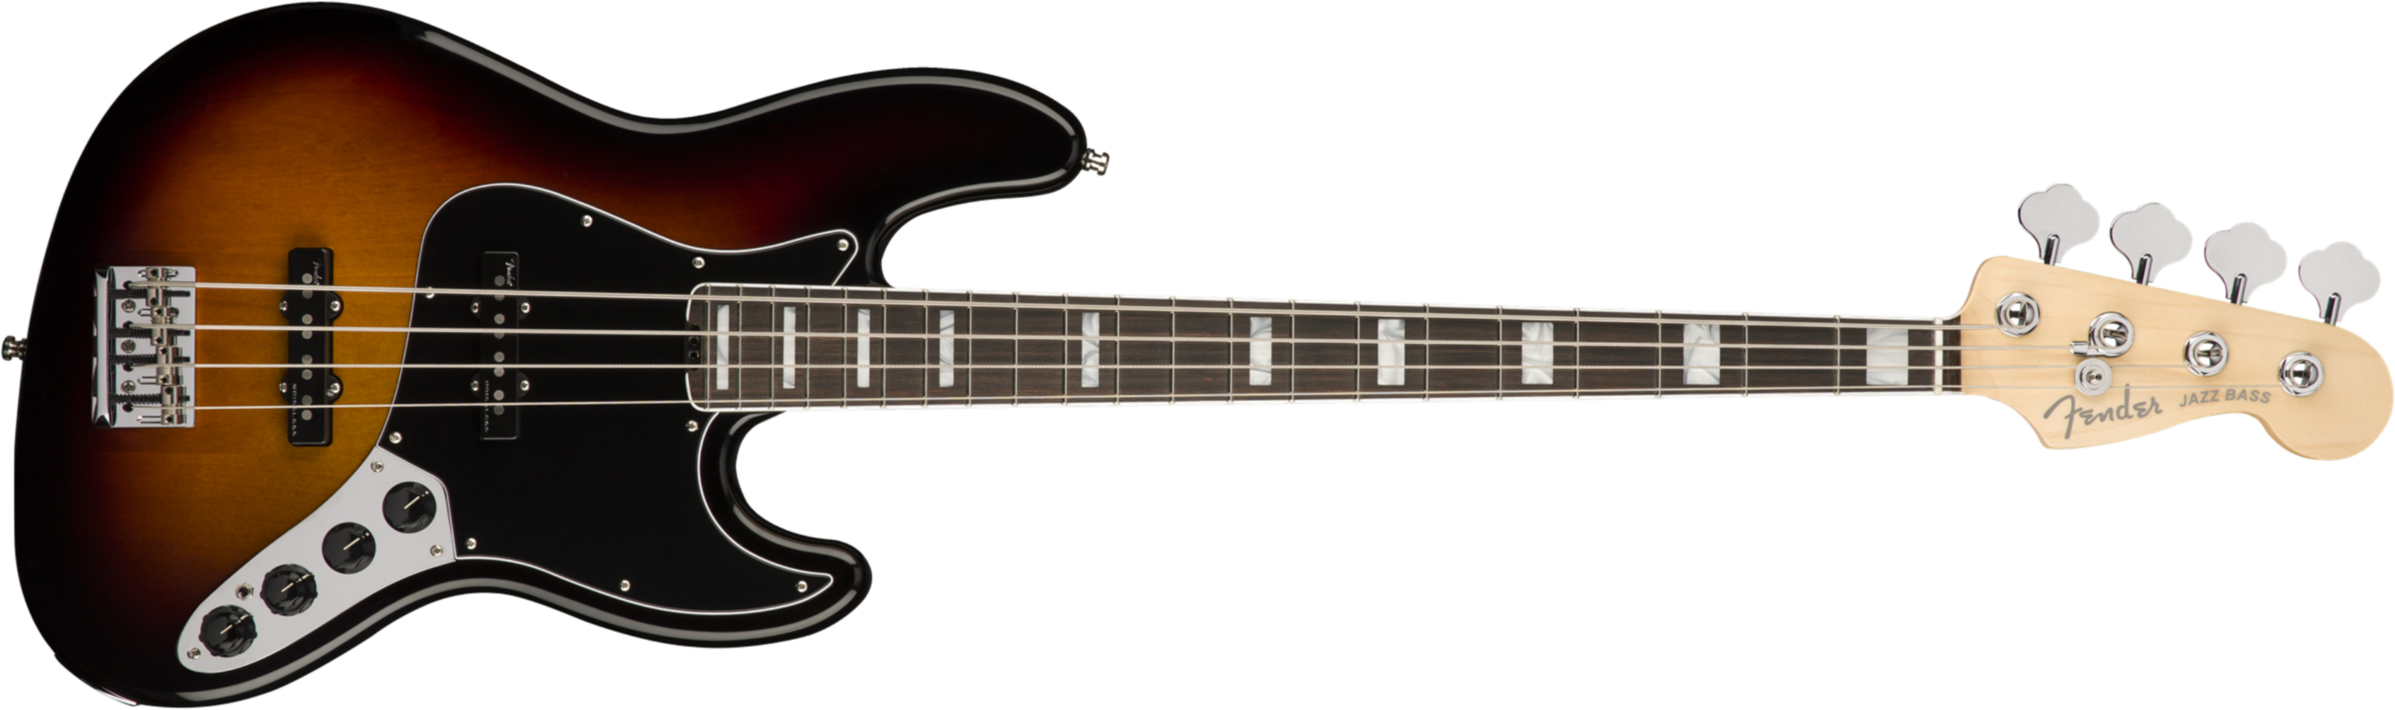 Fender Jazz Bass American Elite 2018 Usa Eb - 3 Color Sunburst - Solid body elektrische bas - Main picture